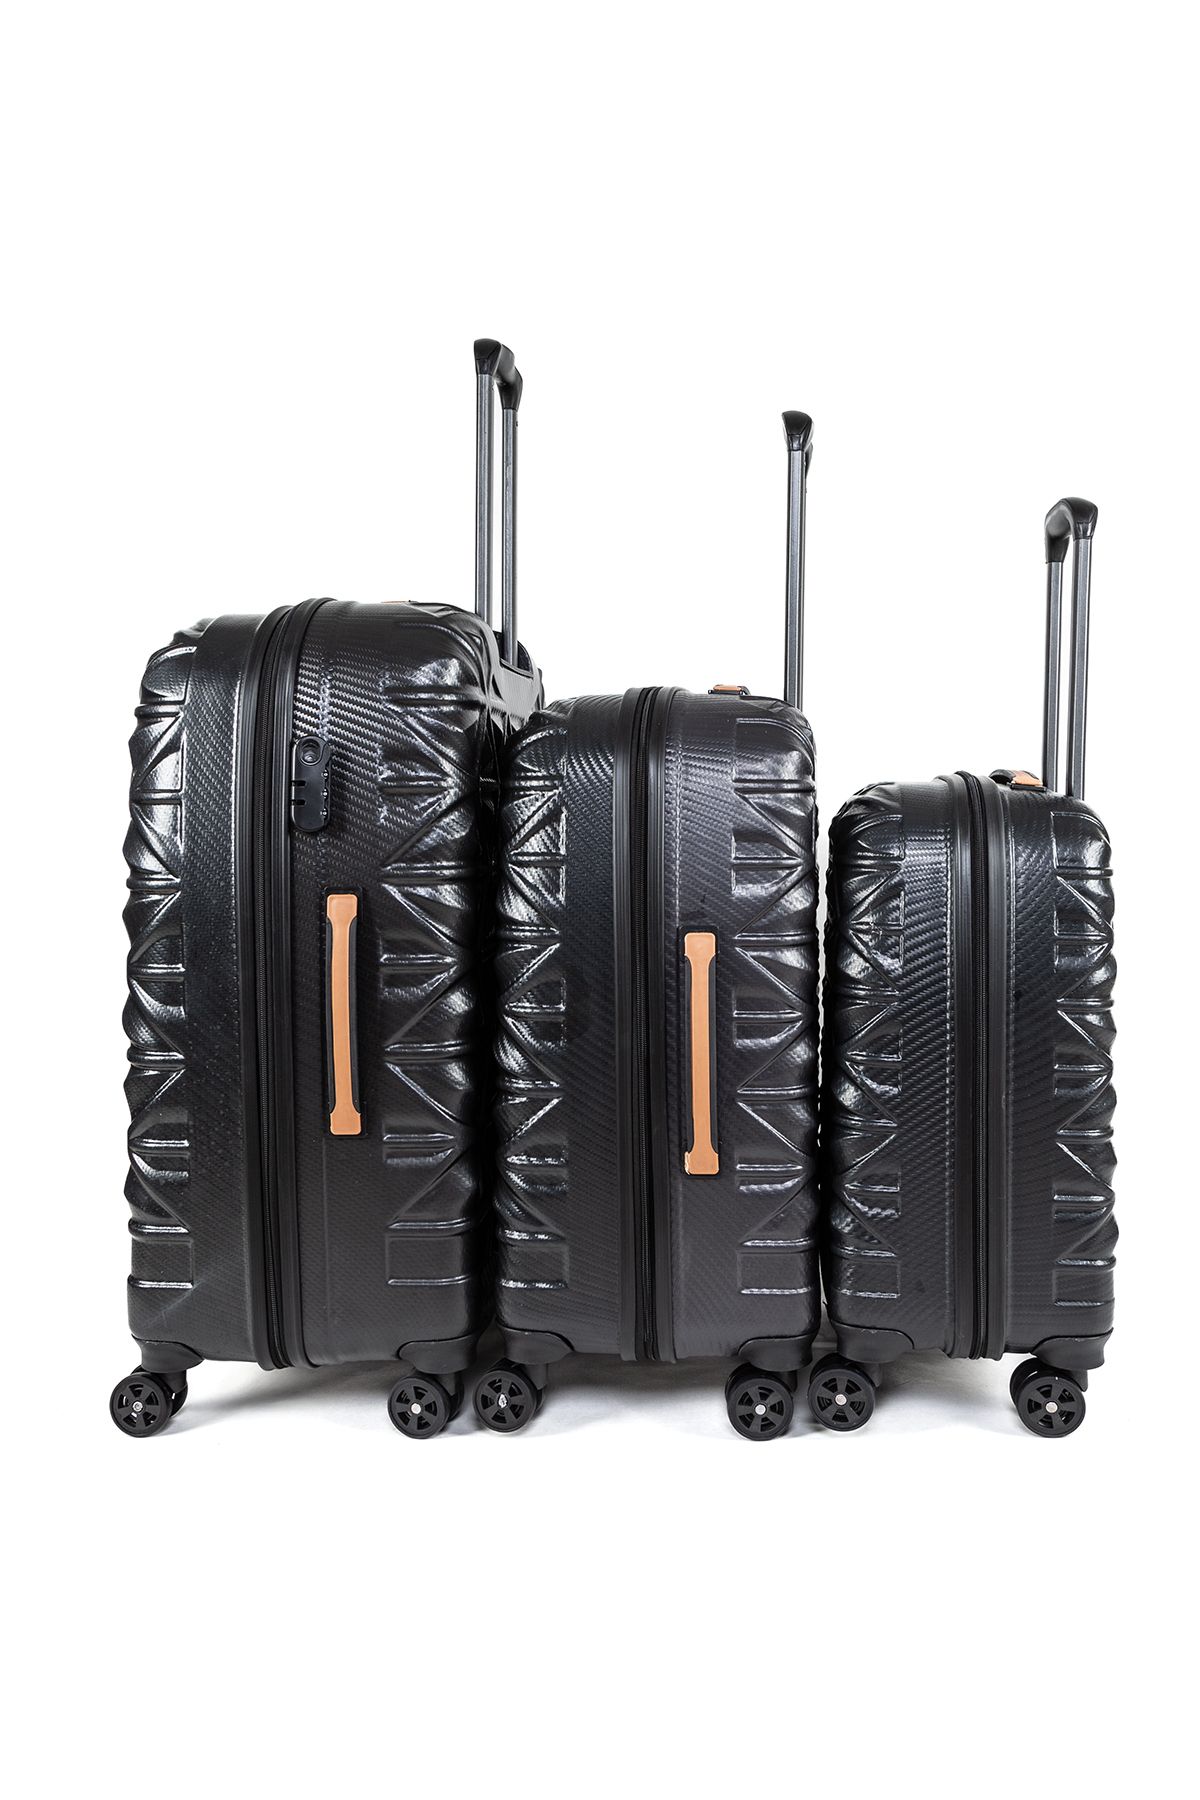 LAYLİNE 3'Lü Lüx Kilitli Valiz & Bavul Seti